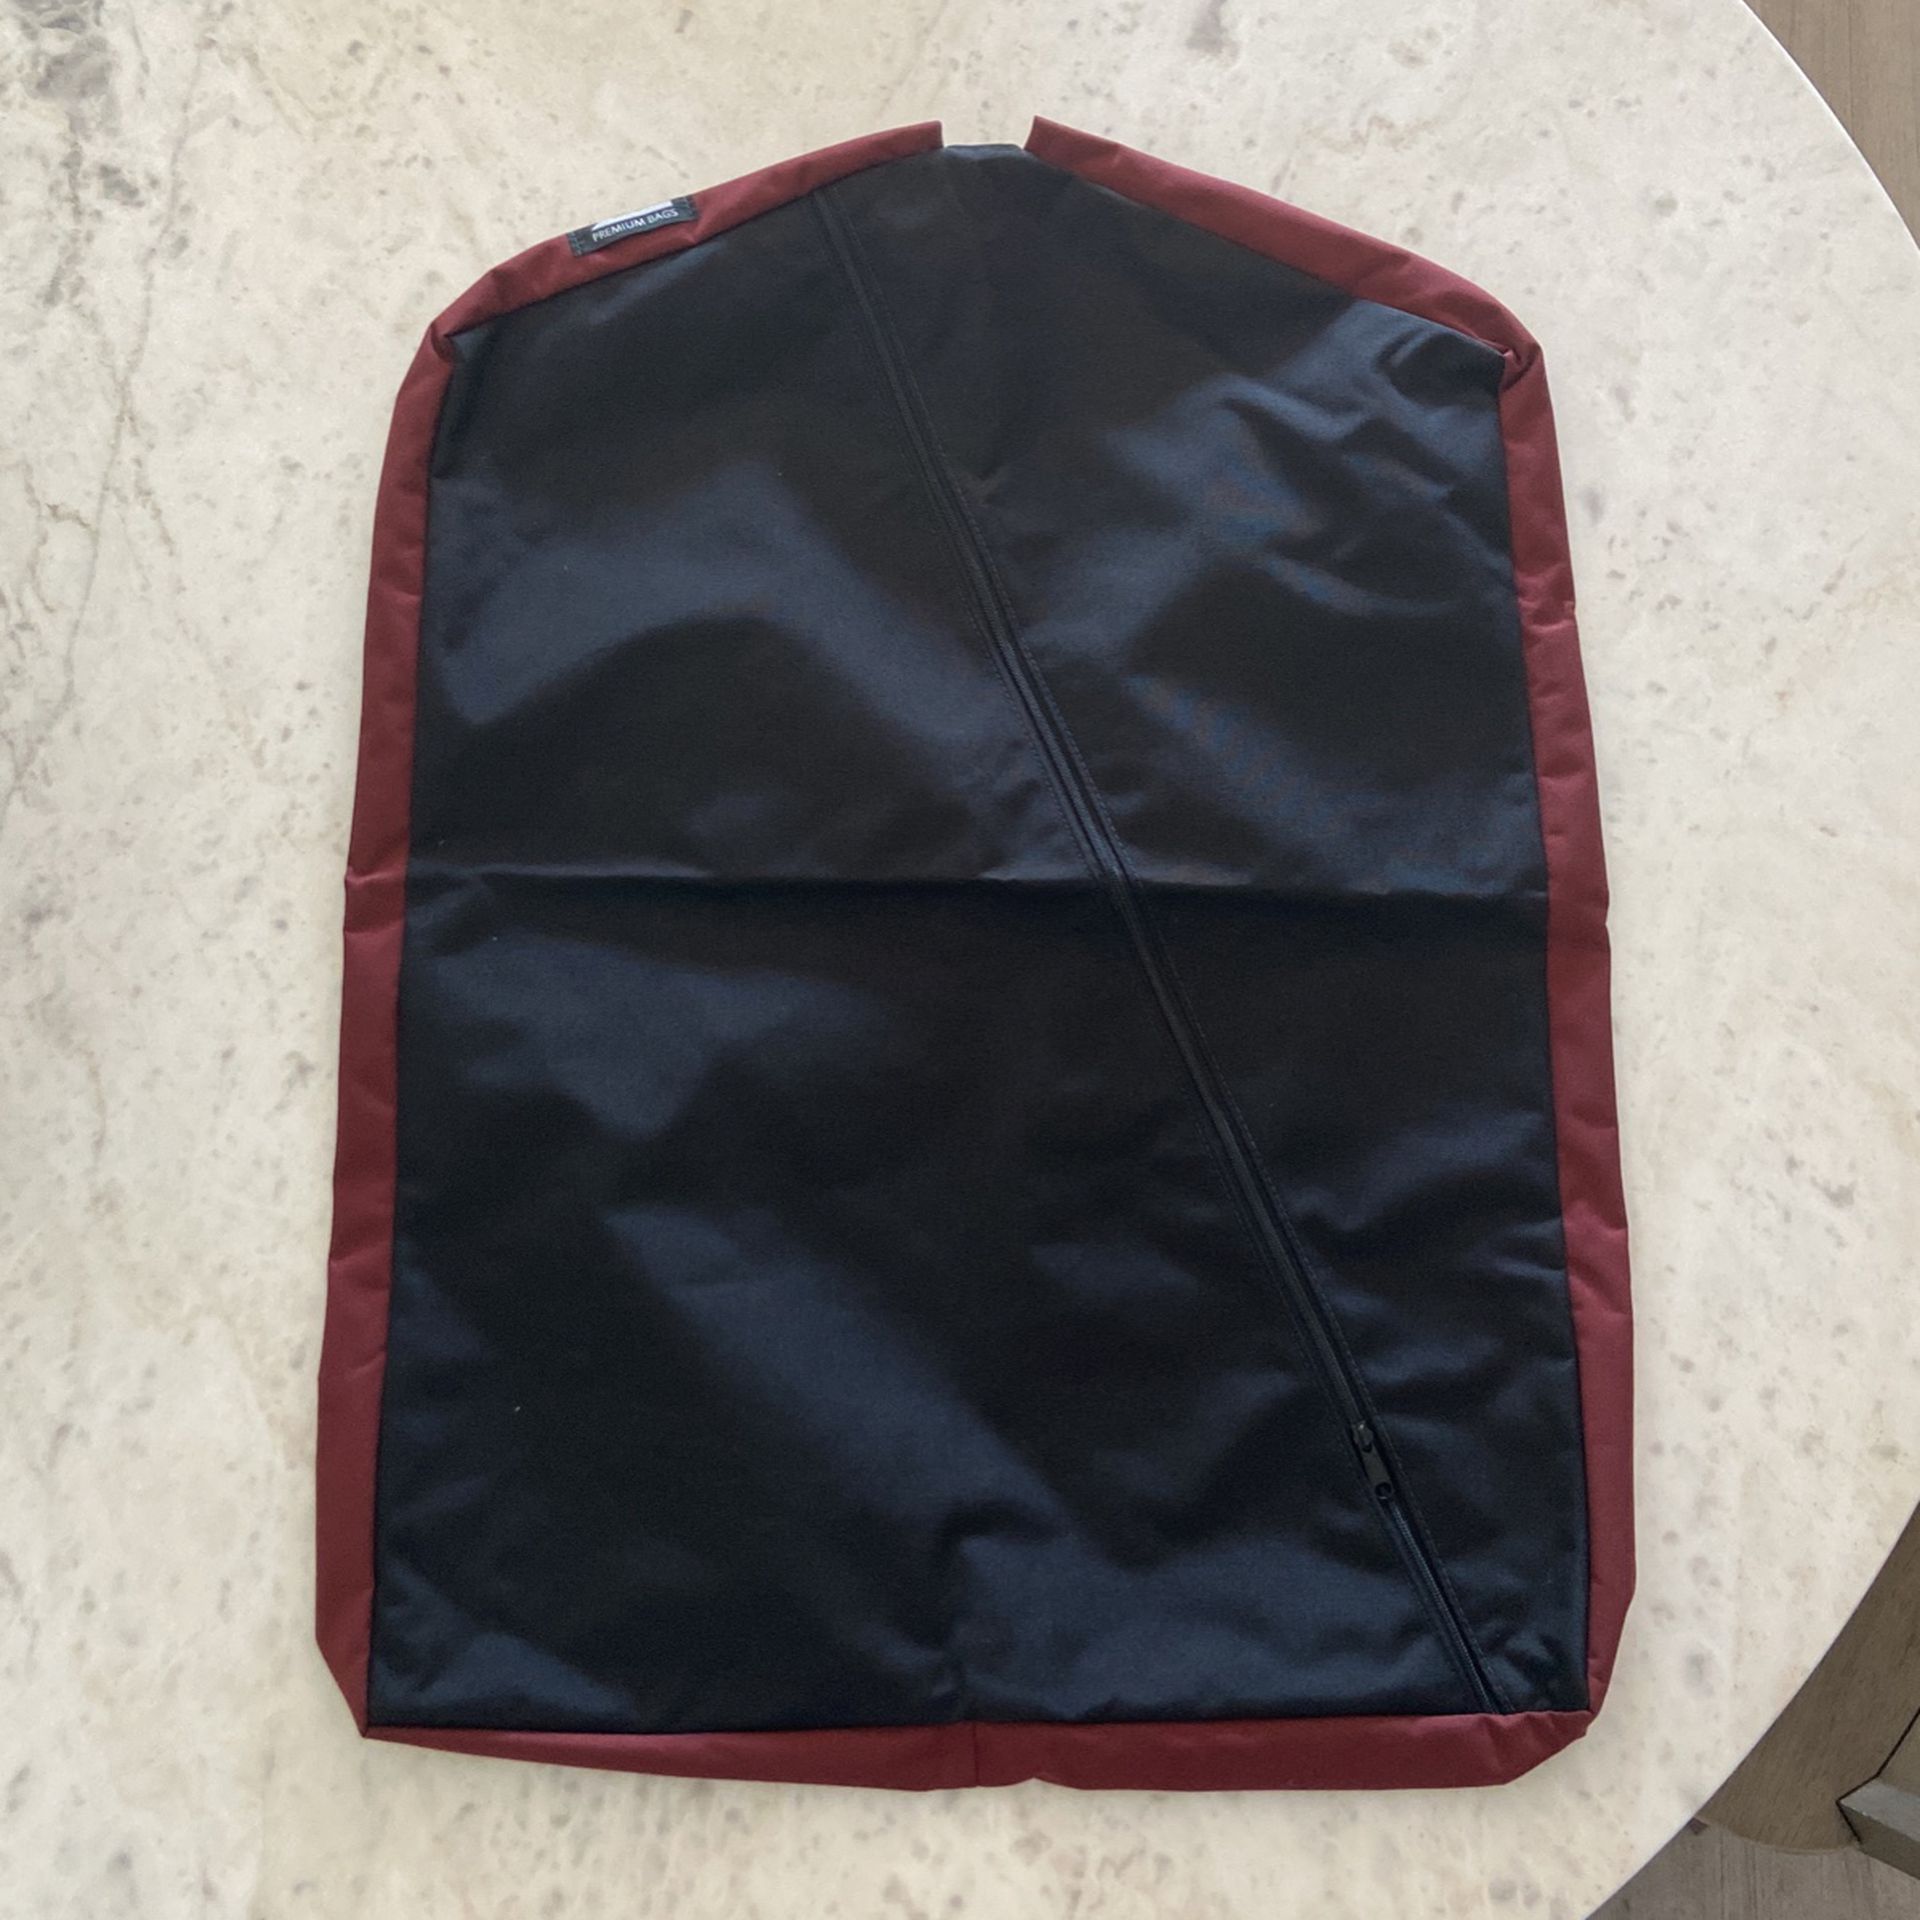 Jersey/uniform Bag